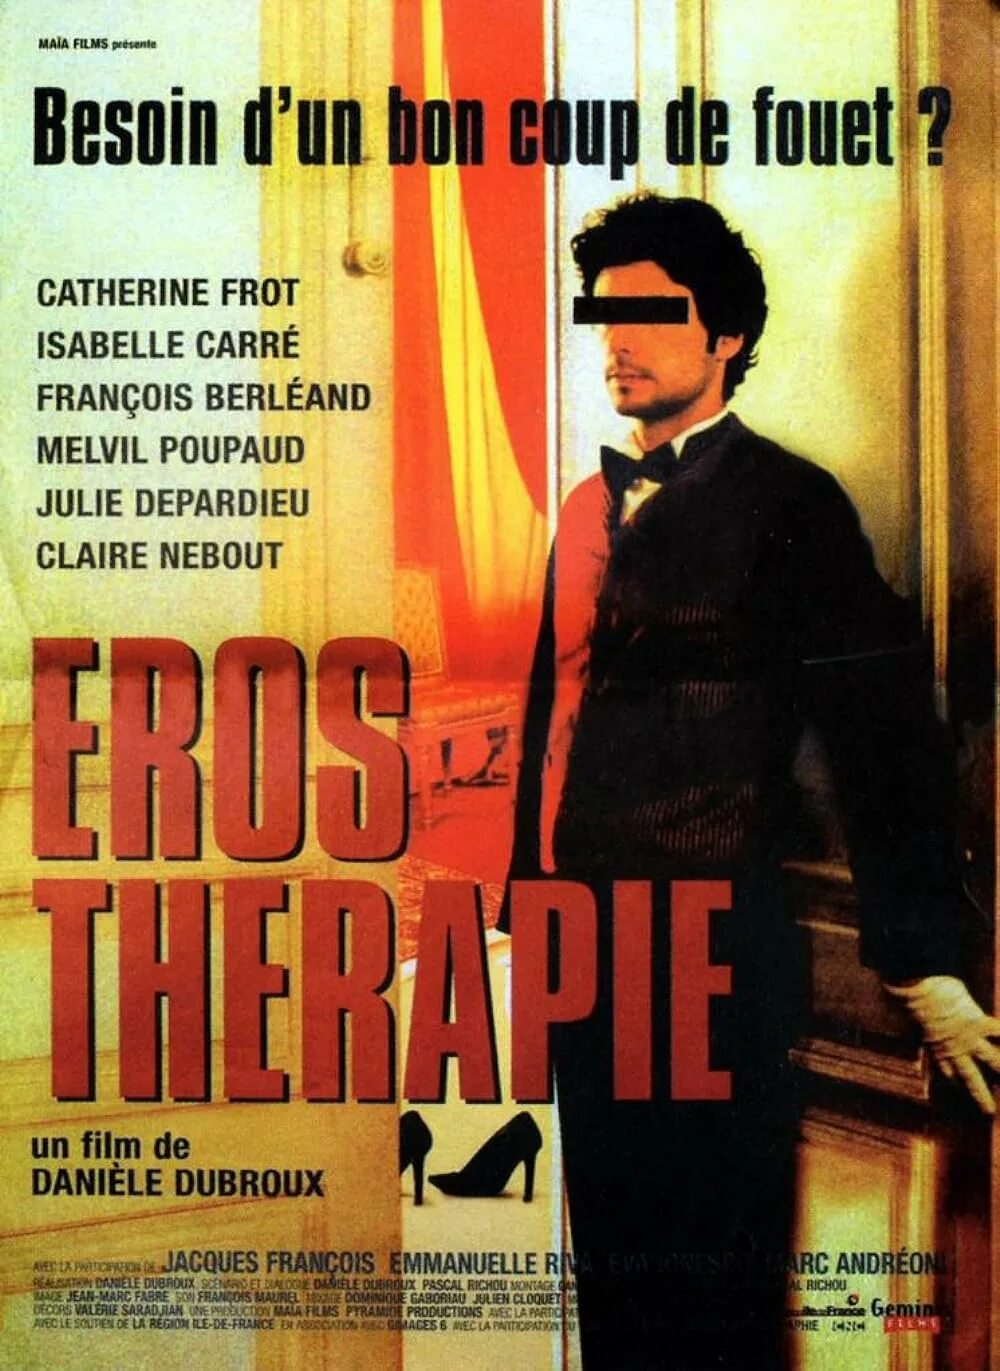 Eros movie. Eros Therapy 2004. Eros 2004. Claire Nebout Eros Therapy.